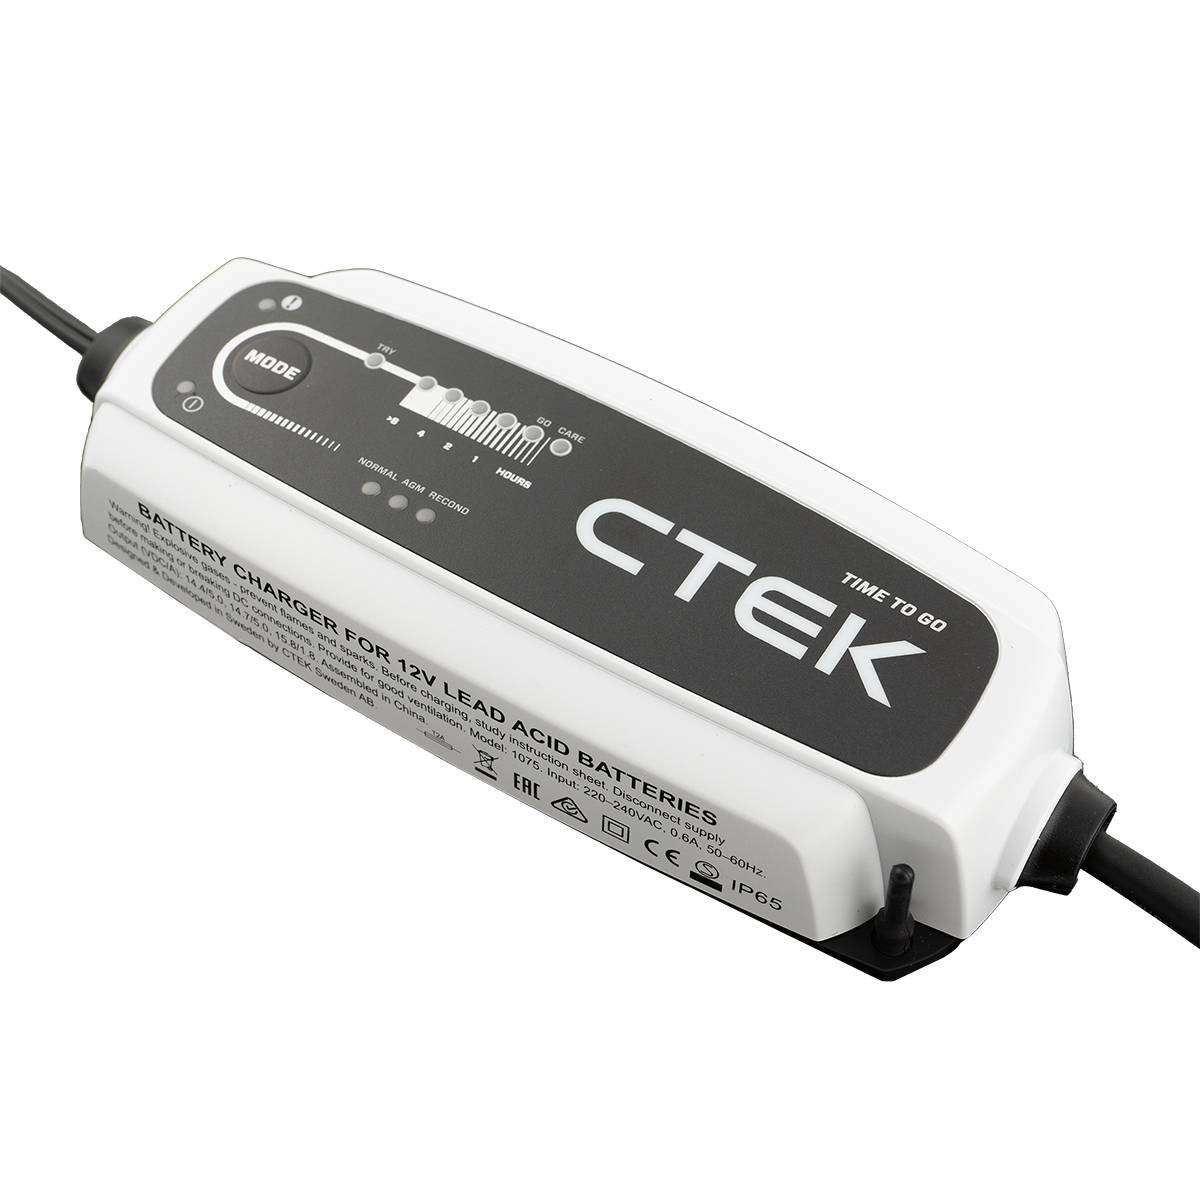 CTEK CT5 TIME TO GO EU charger for 12V AGM batteries